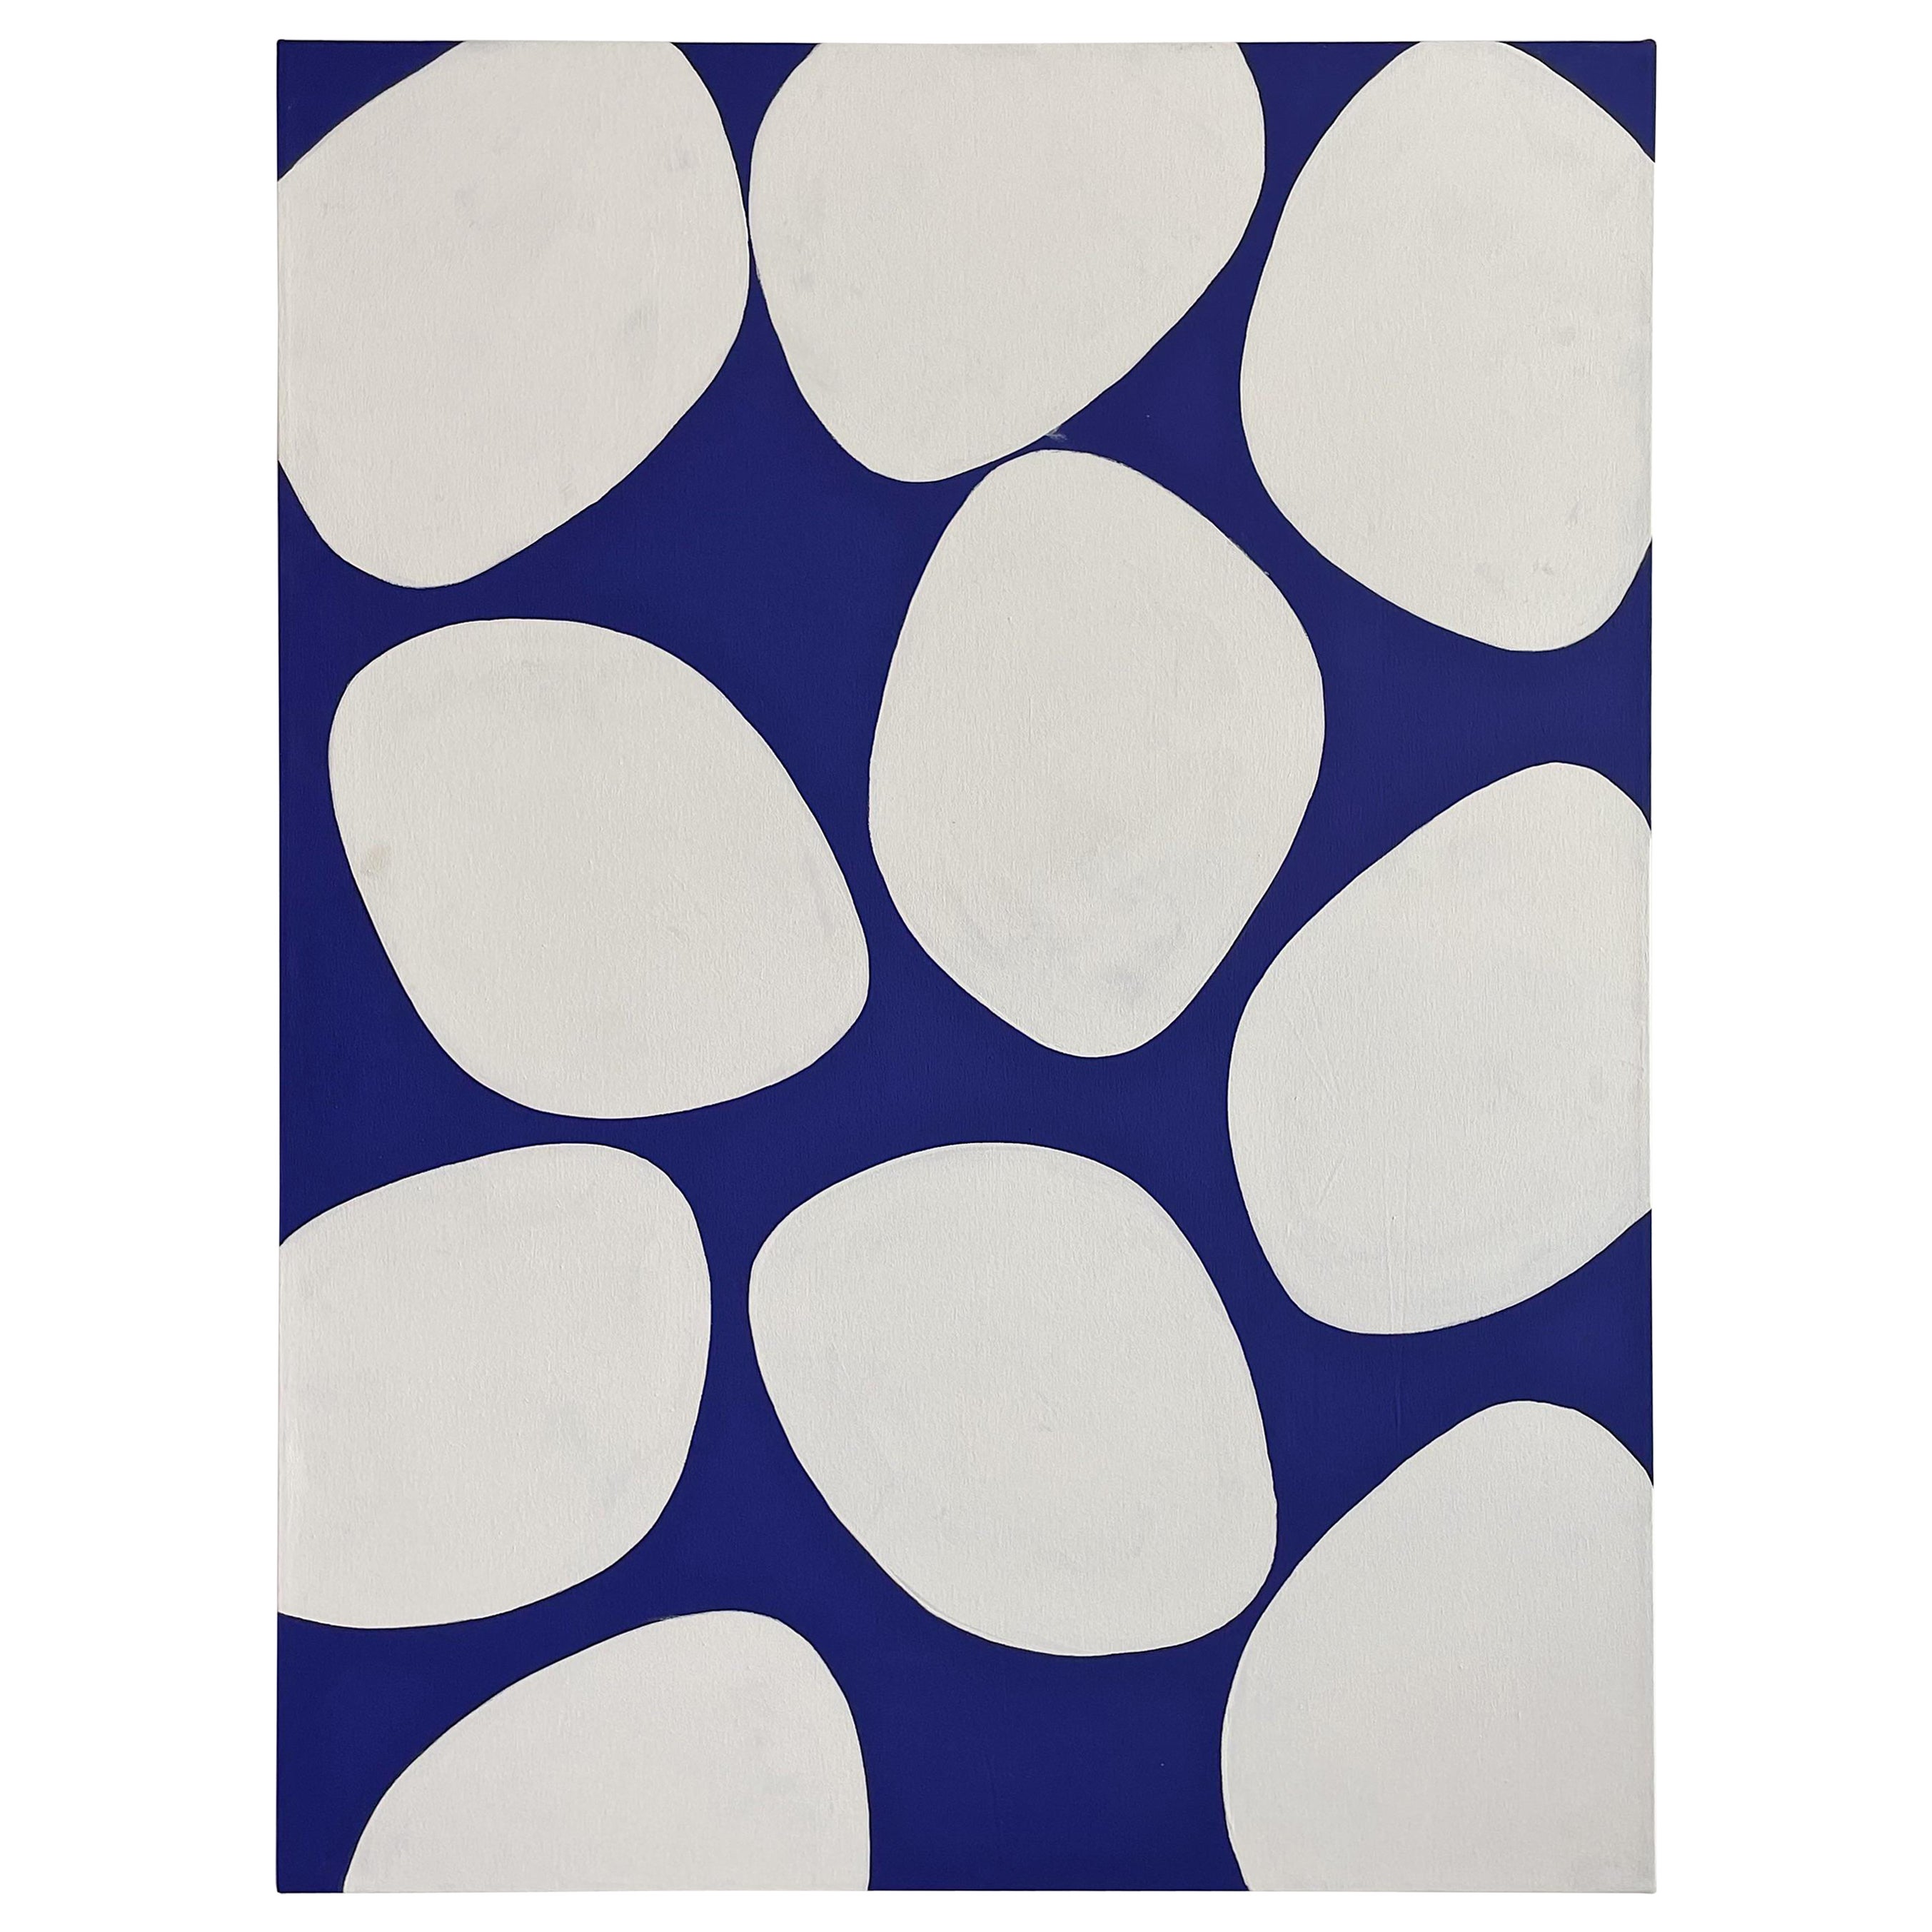 Mark Humphrey Original Blue and White Circles Acrylic on Canvas